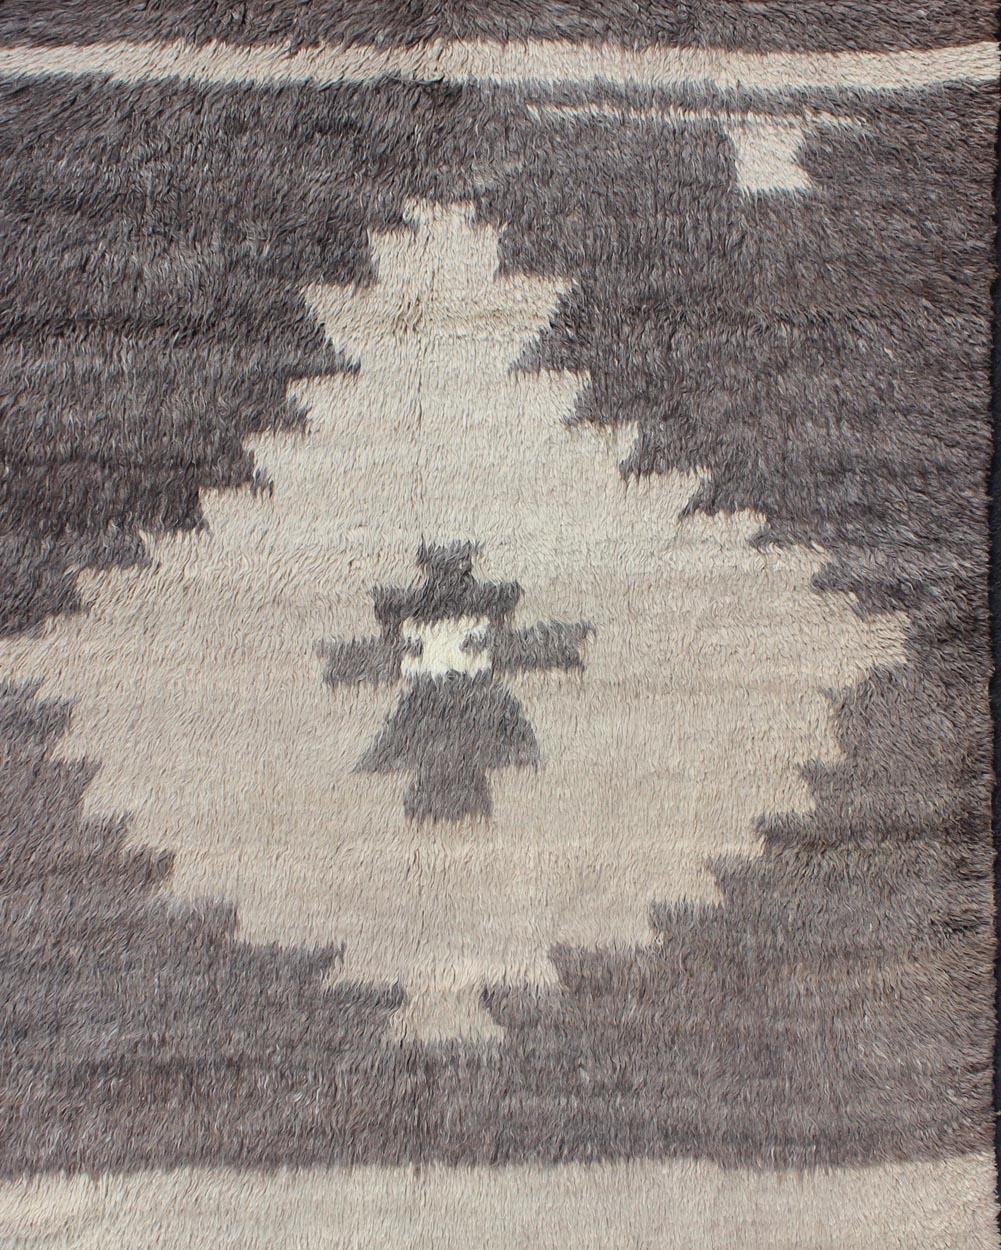 Angora Tulu vintage Turkish rug in Minimalist design and modern design with multi-layered medallion, rug EN-112292, country of origin / type: Turkey / Tulu, circa mid-20th century, Angora Tulu, vintage Tulu, vintage Moroccan.

Keivan Woven